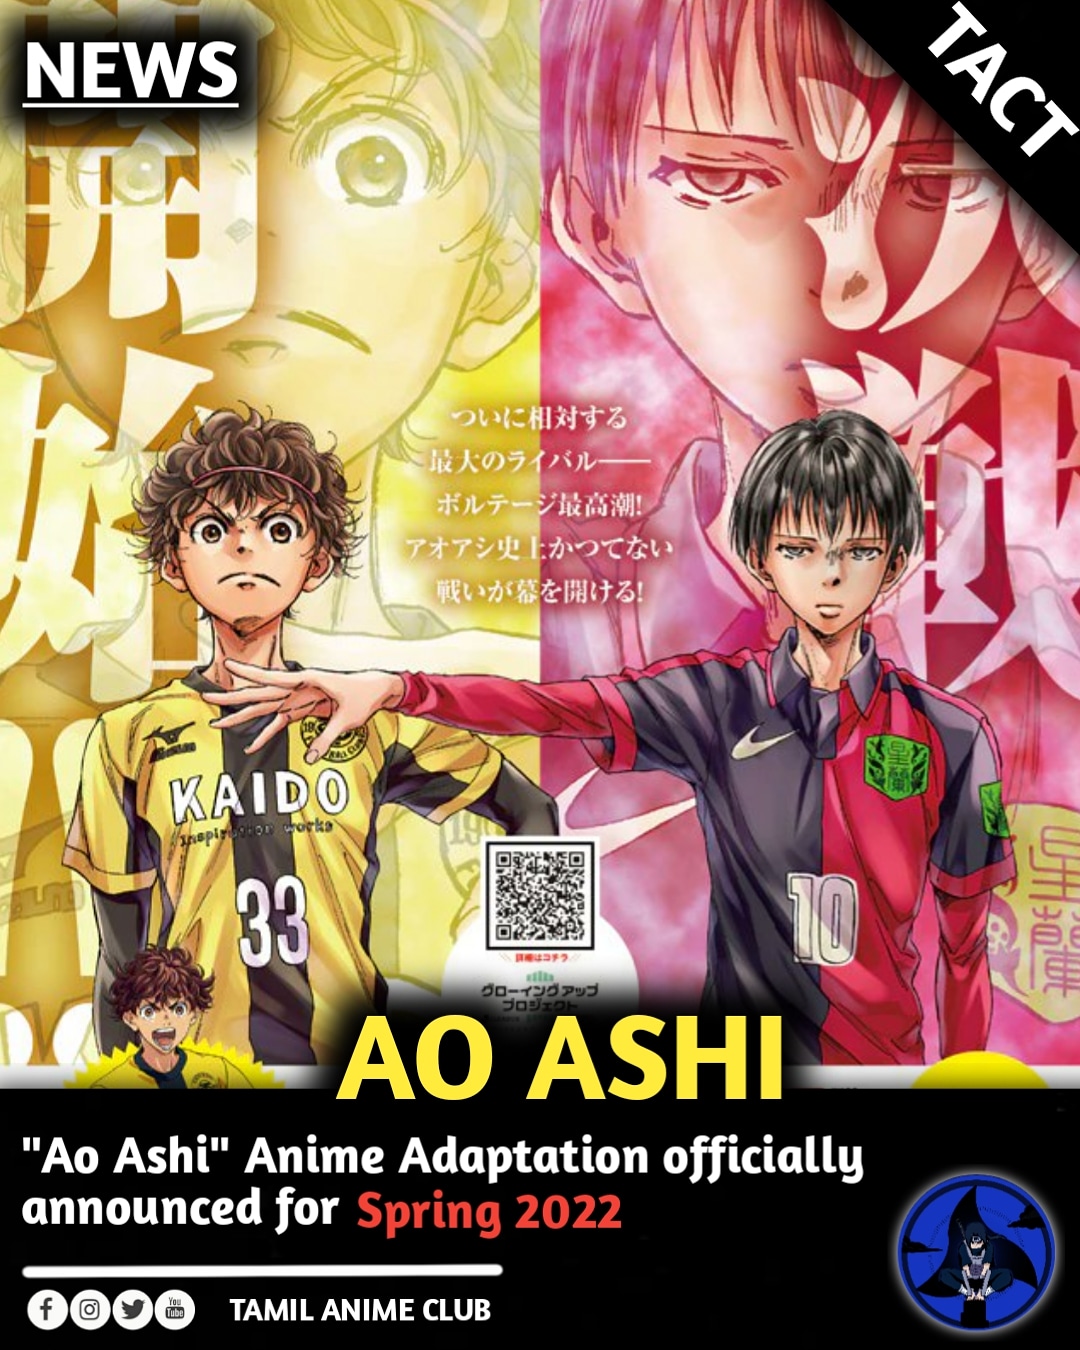 aoashi #aoashianime #aoashimanga #ashitoaoi #manga #otaku #anime